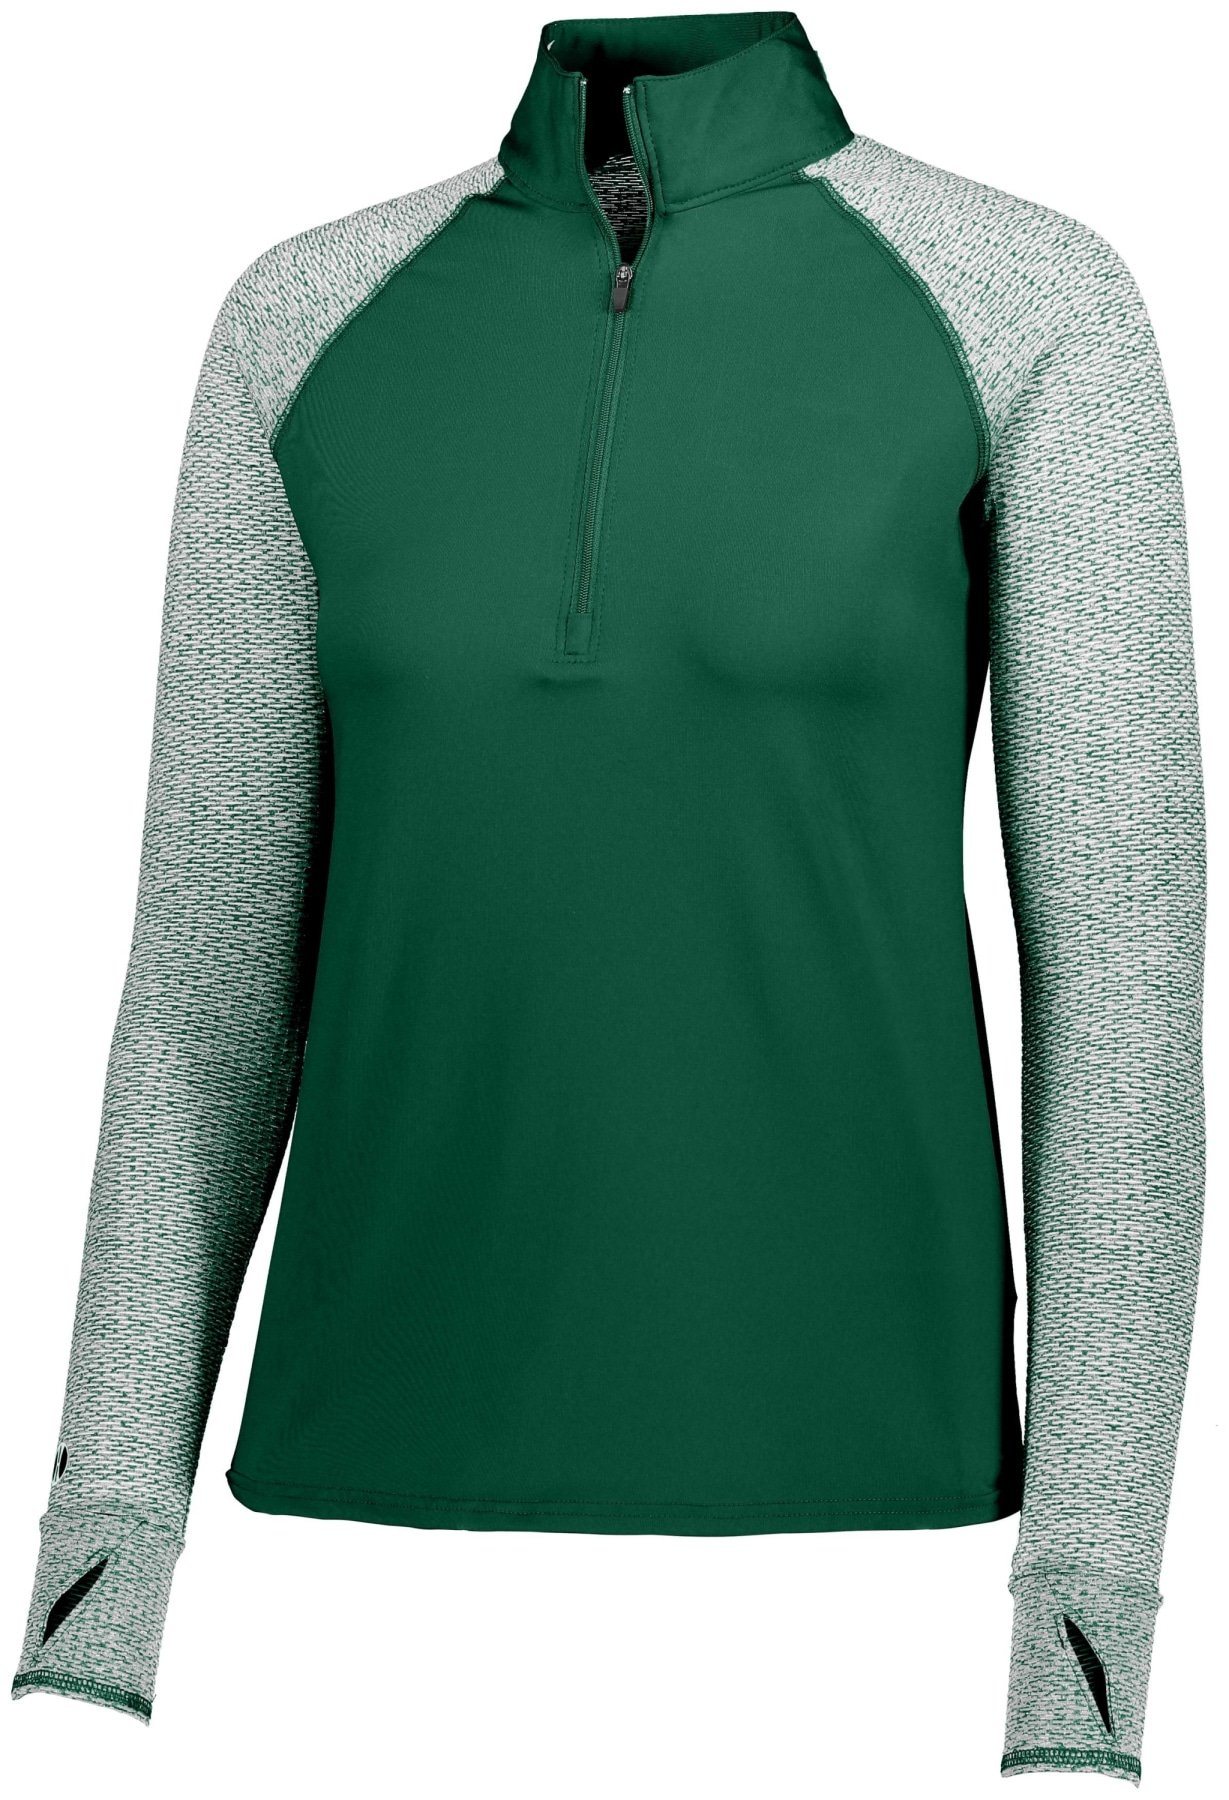 Ladies Athletic Shirt, Long Sleeve Axis 1/2 Zip Pullover 43